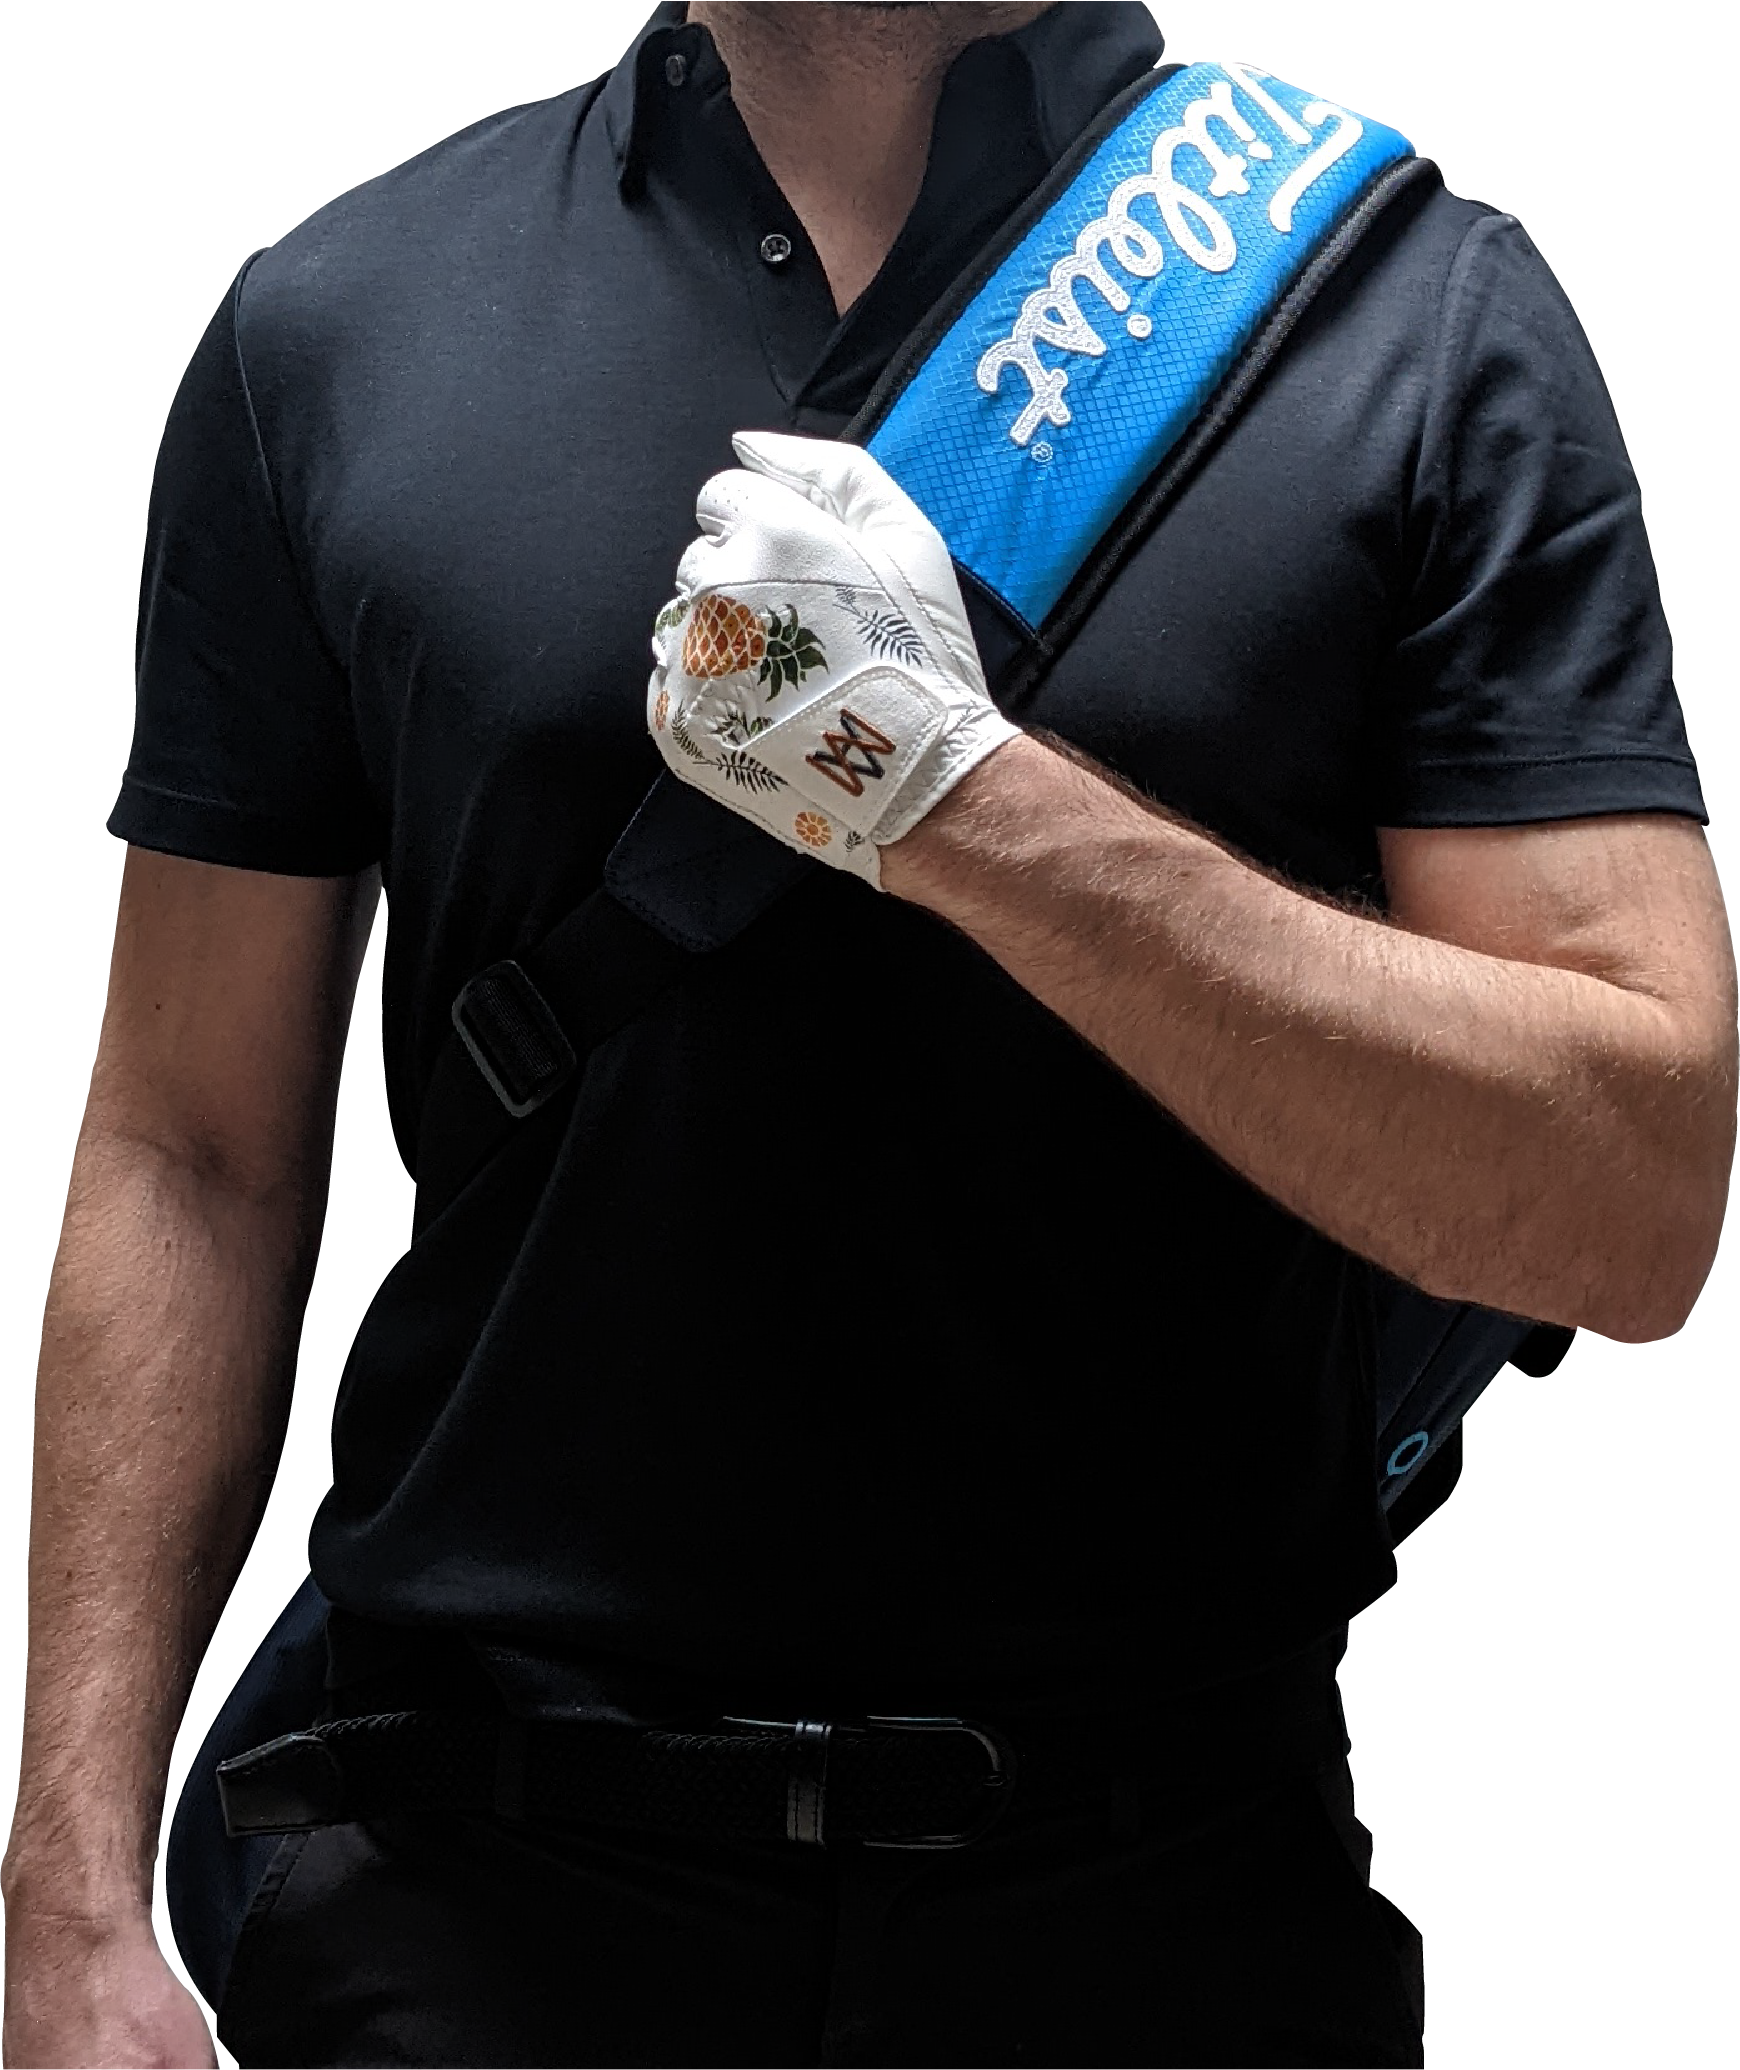 BeachVibes & Birdies TourSoft Glove with jet black Polo Shirt and Titleist golf bag - Lifestyle photo